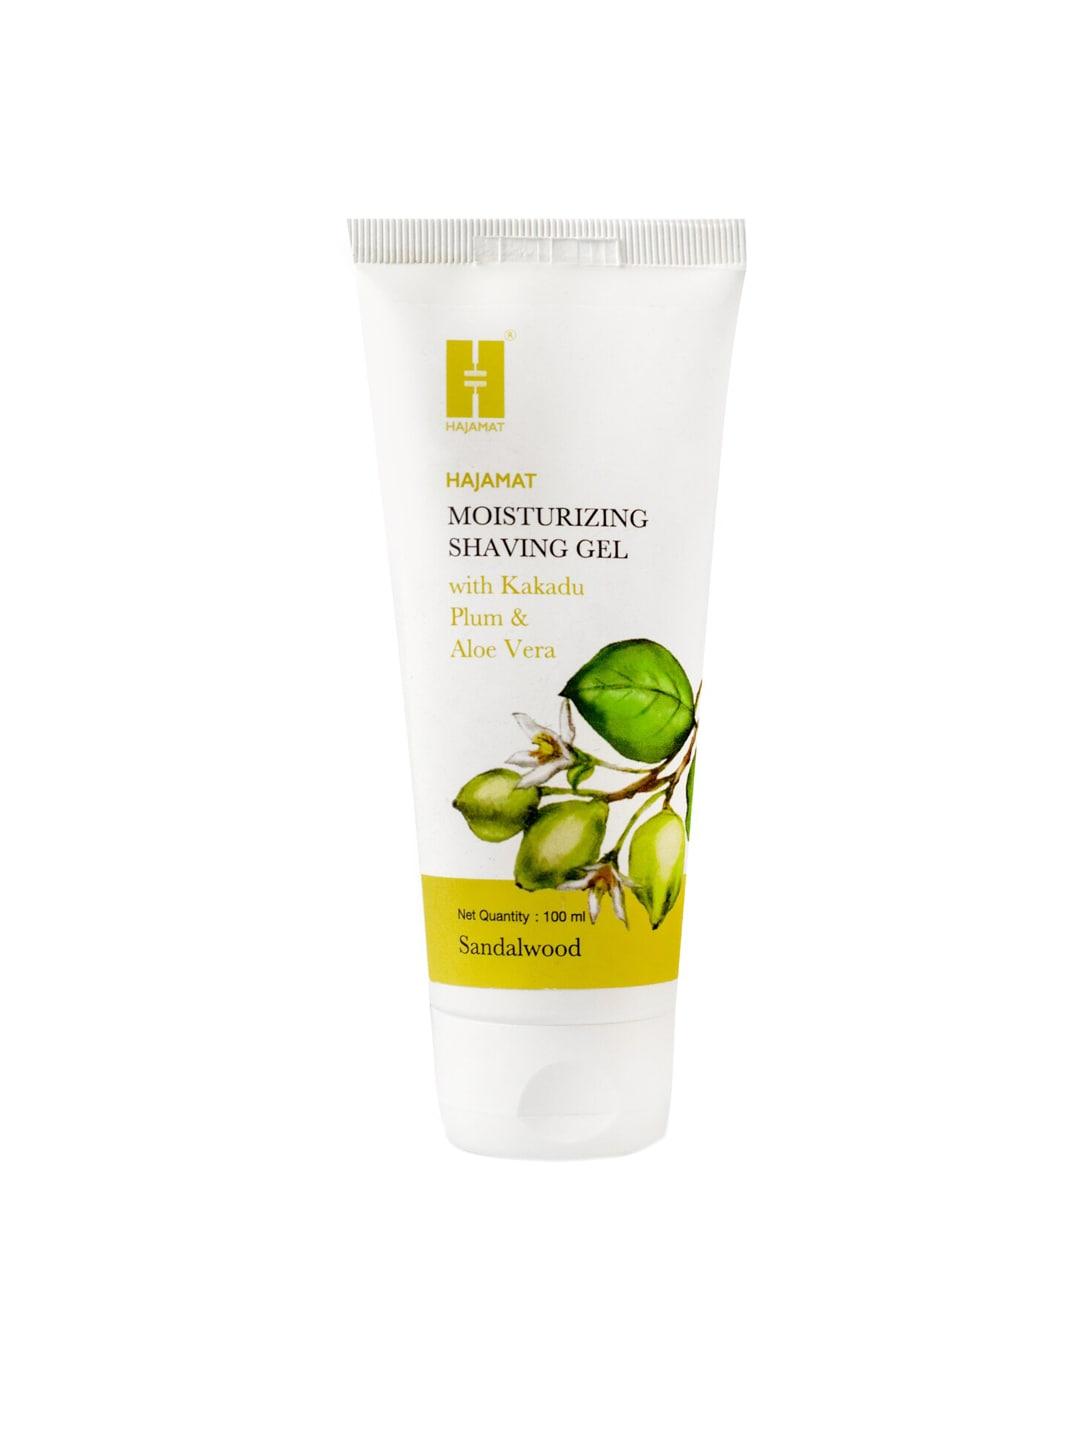 hajamat moisturizing shaving gel with kakadu plum & aloe vera - 100 ml